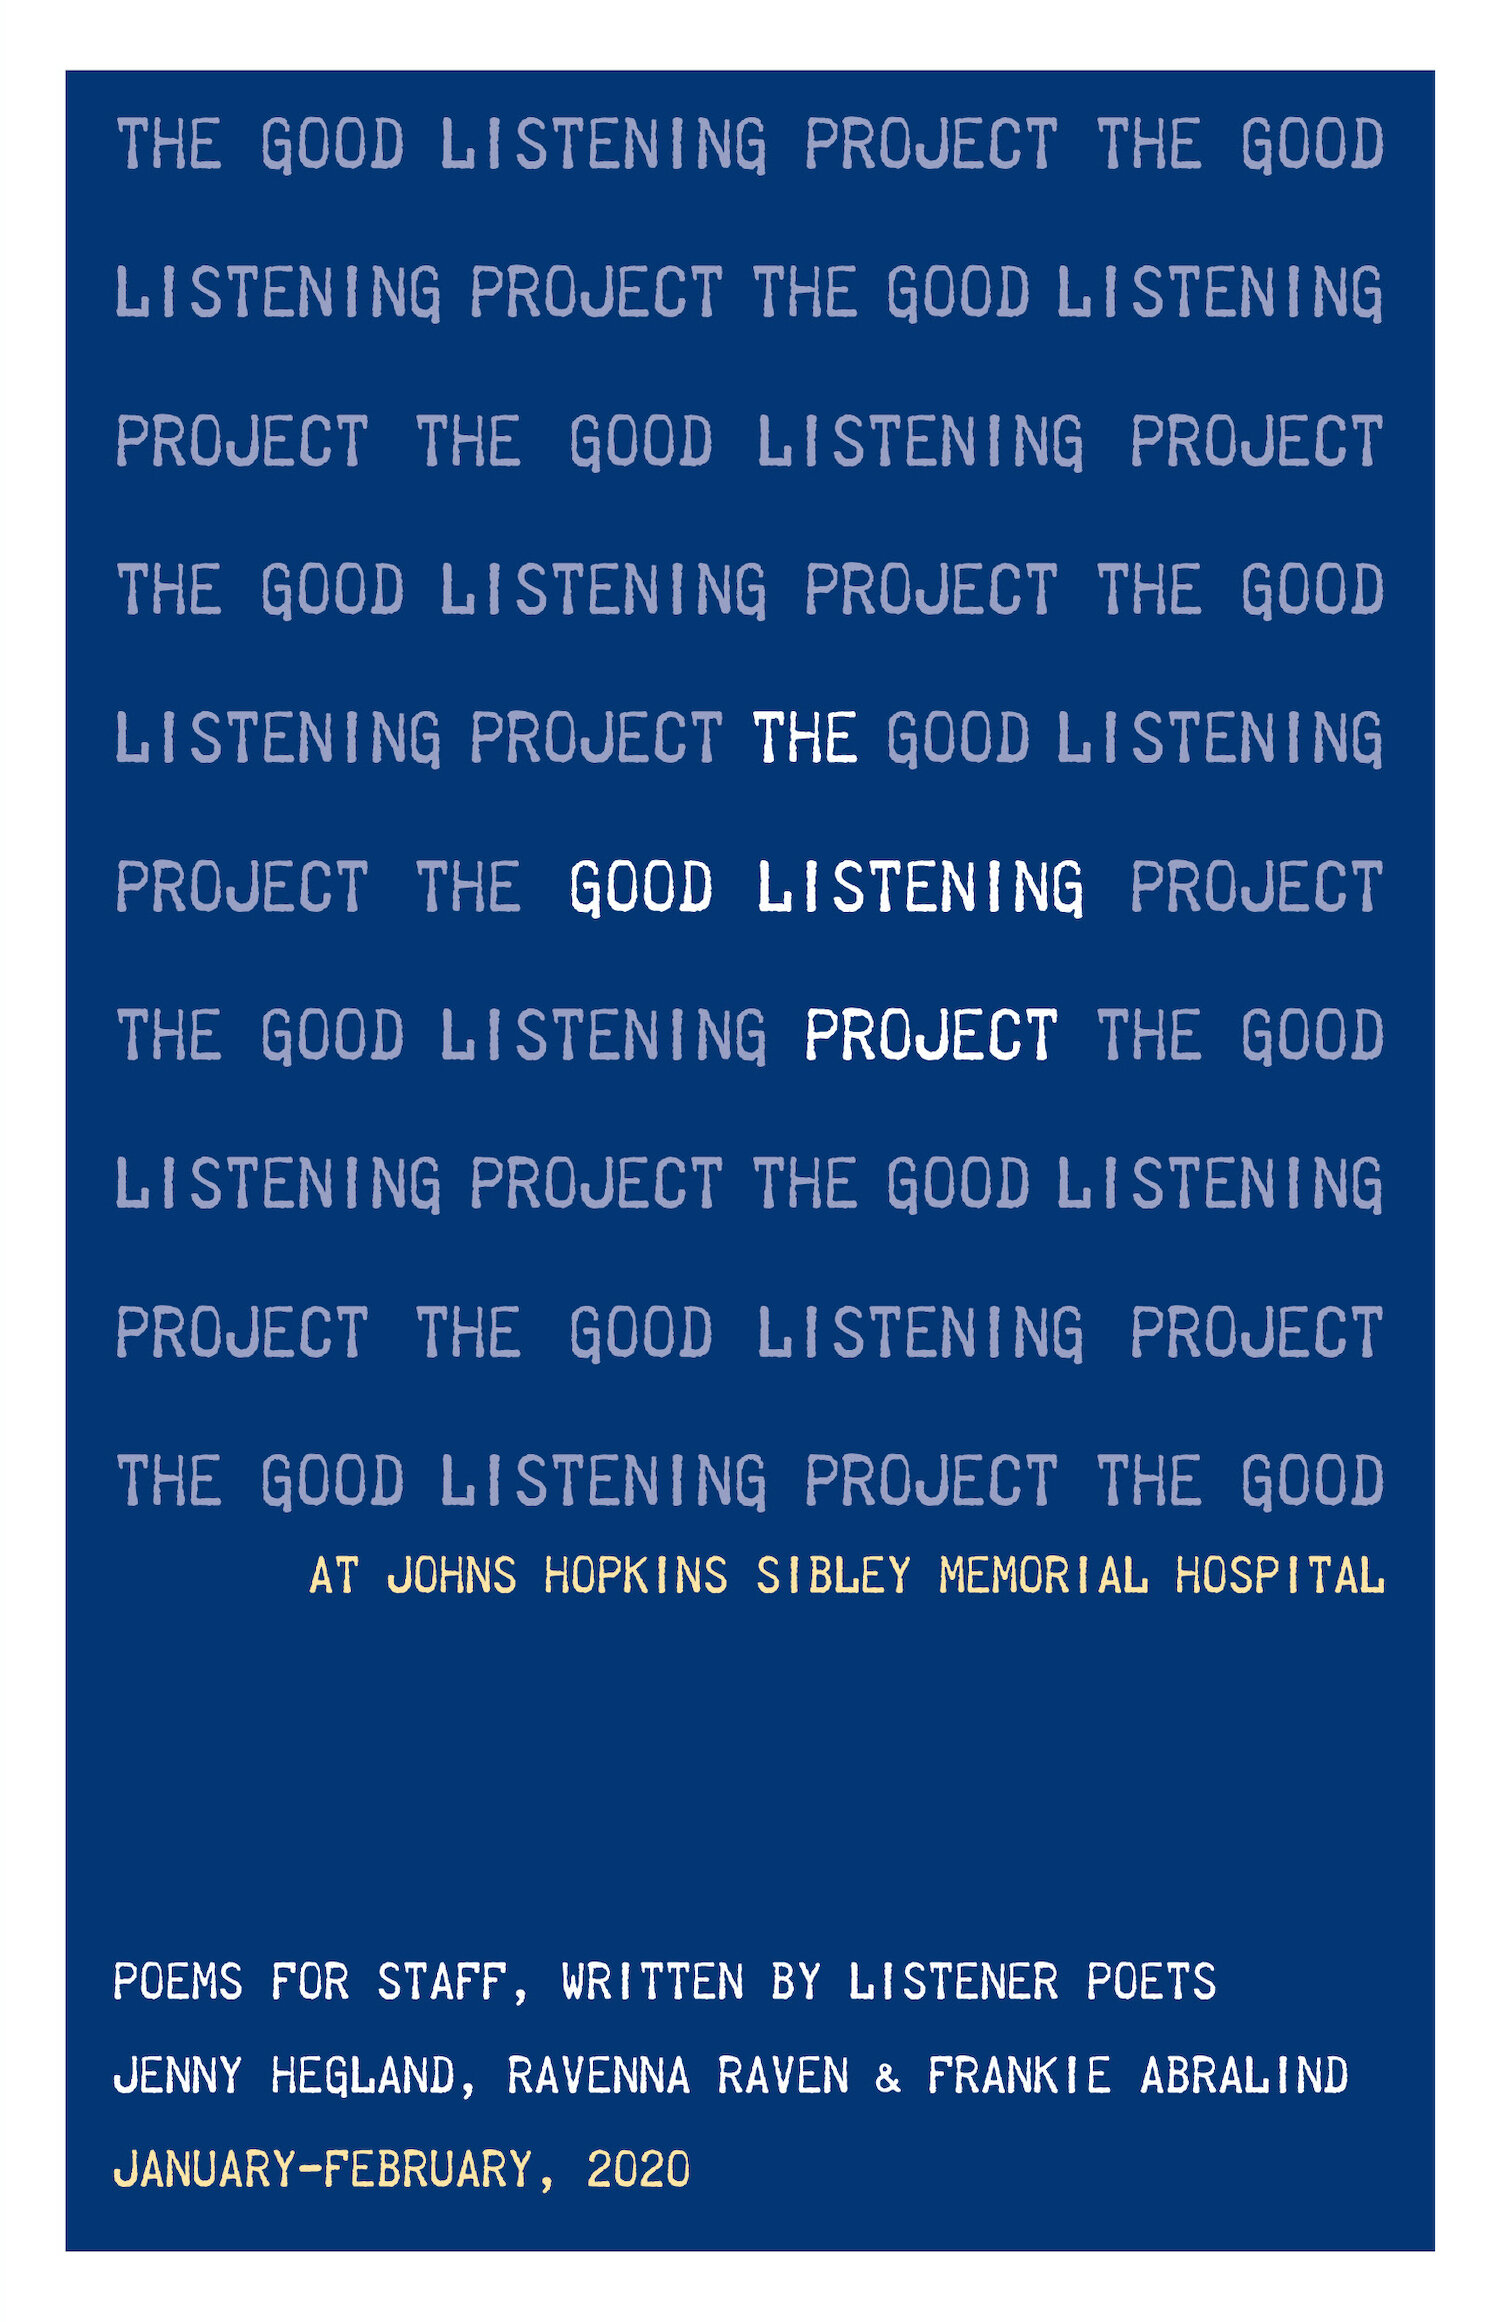 Johns Hopkins Sibley Memorial Hospital 2020 Collection Cover.jpg